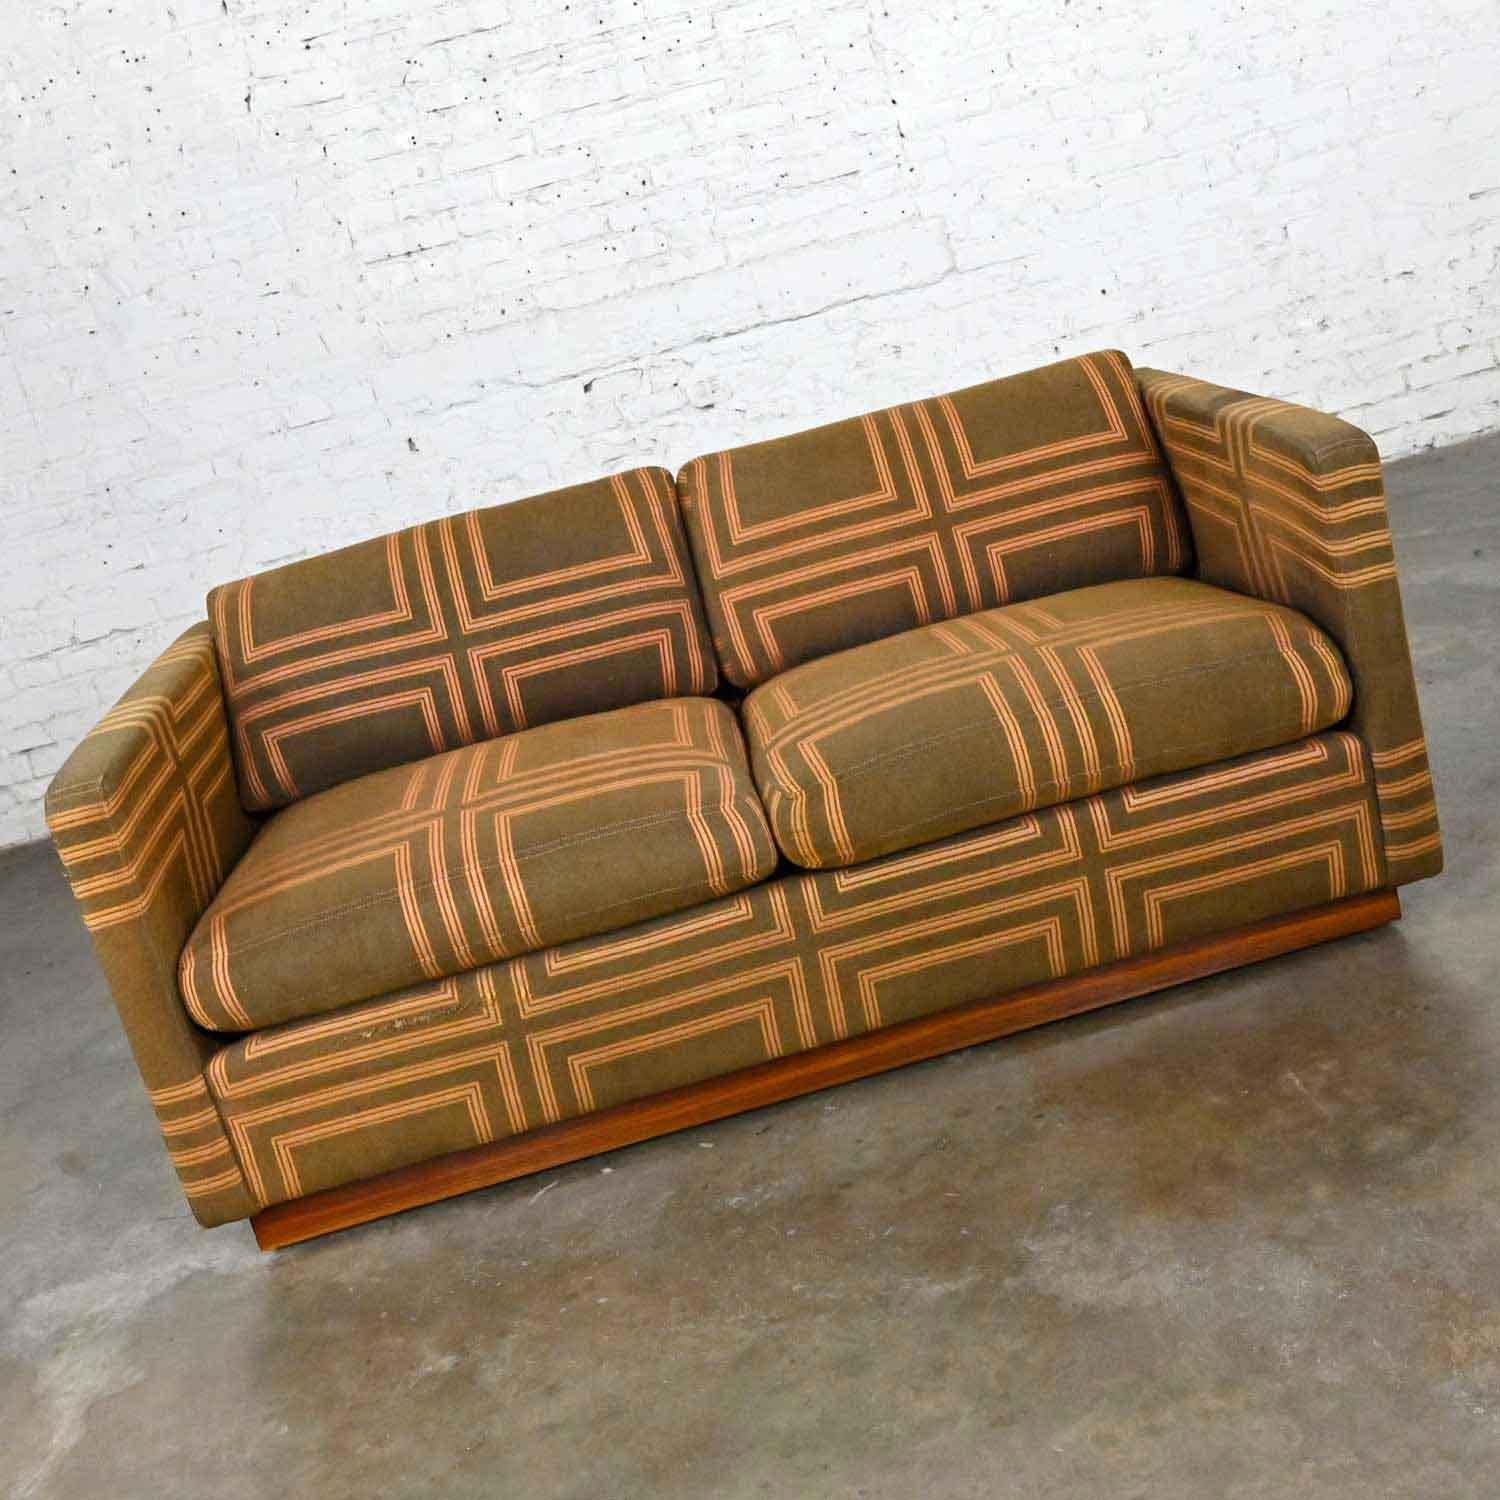 American Modern Tuxedo Love Seat Sofa by Milo Baughman for Thayer Coggin Designer's Group